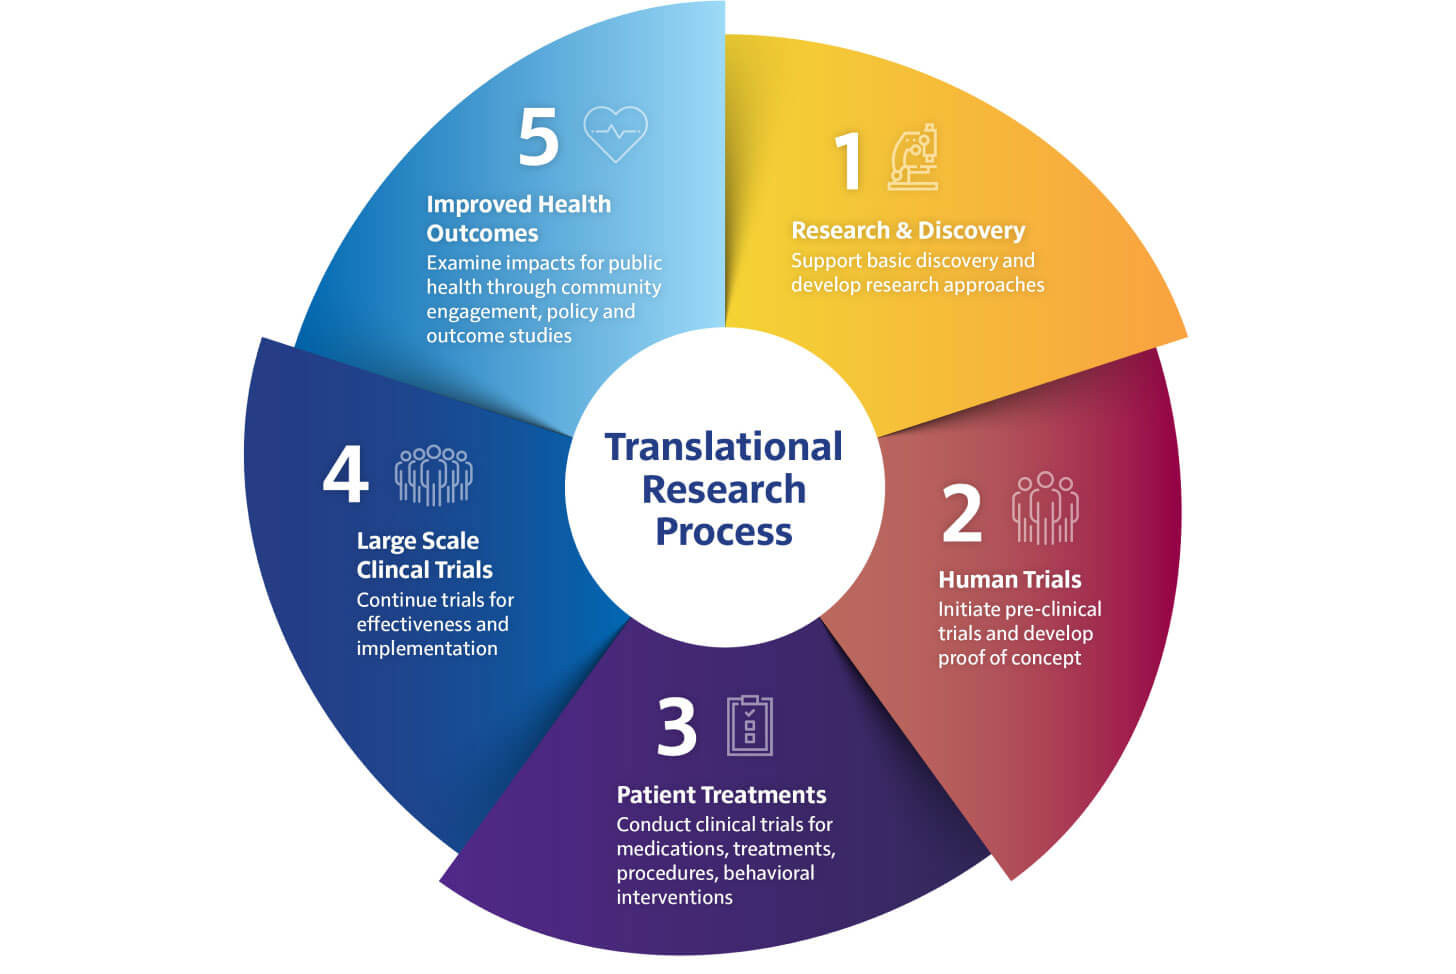 Translational Research Process